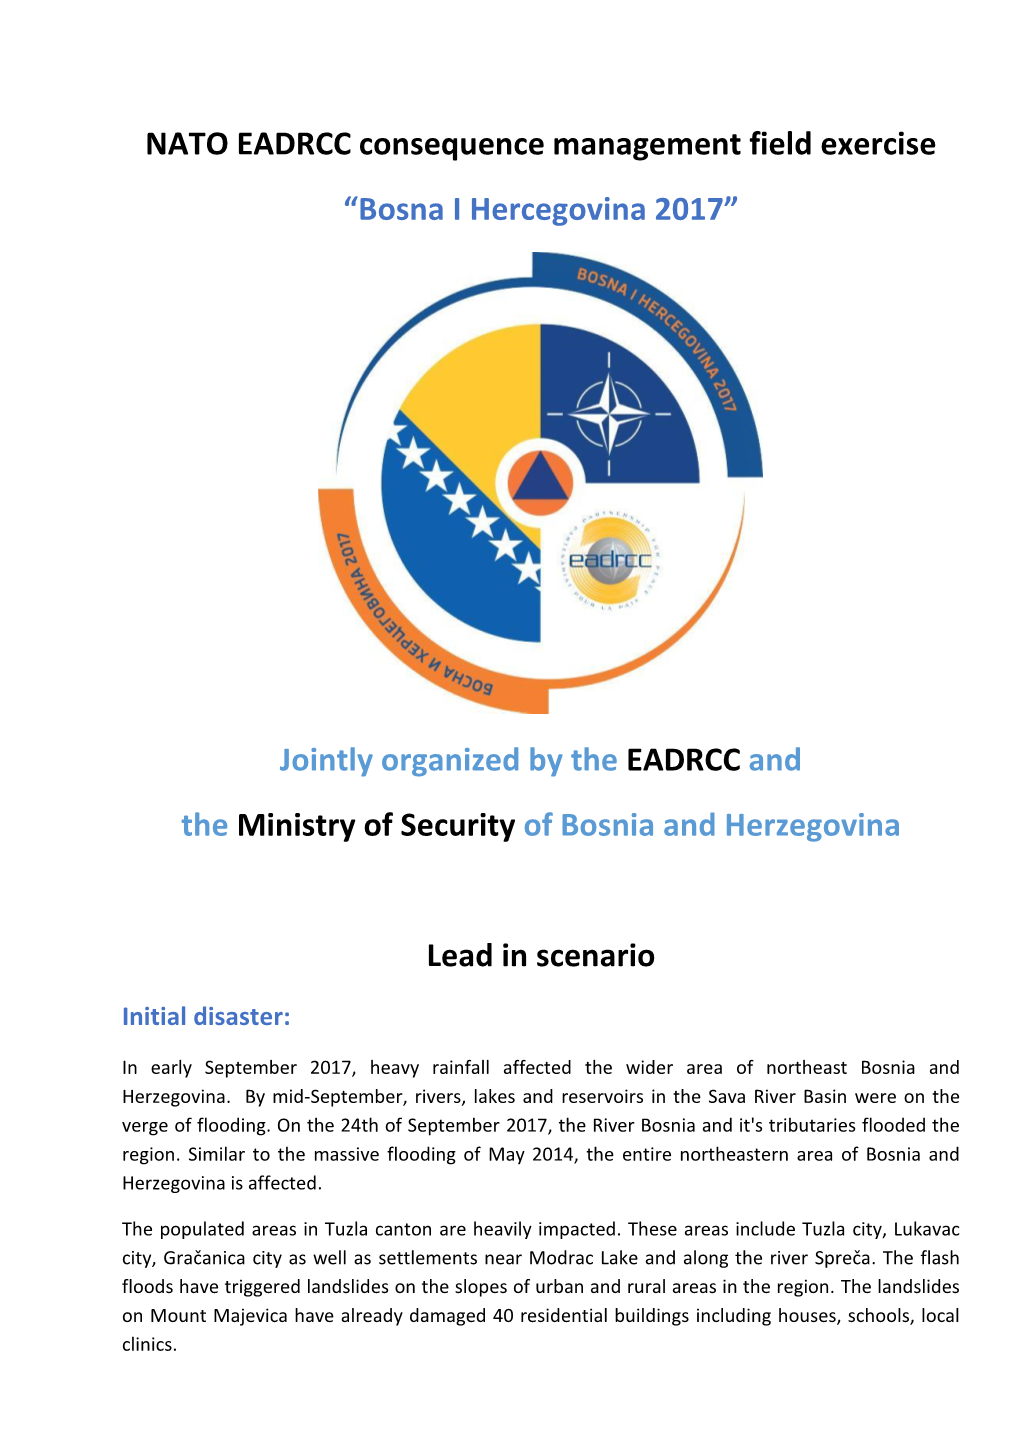 NATO EADRCC Consequence Management Field Exercise “Bosna I Hercegovina 2017”